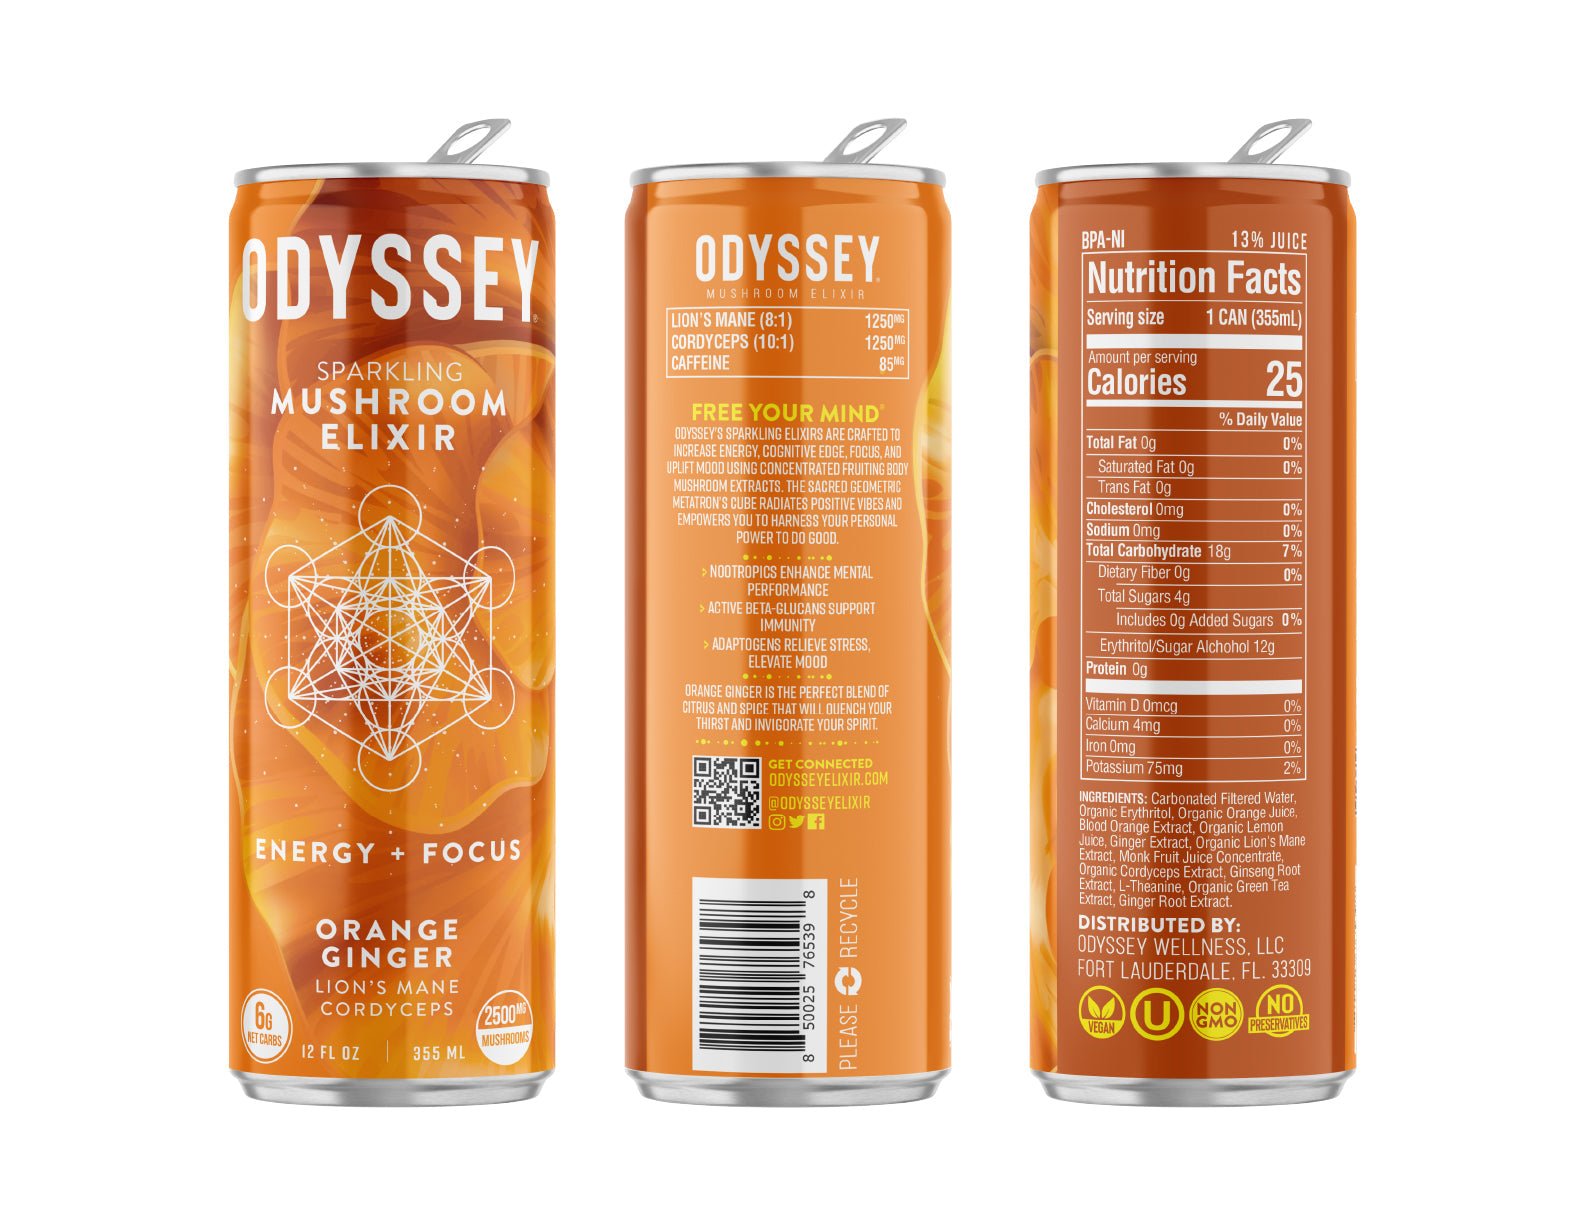 Odyssey Elixir Orange Ginger - Multiverse